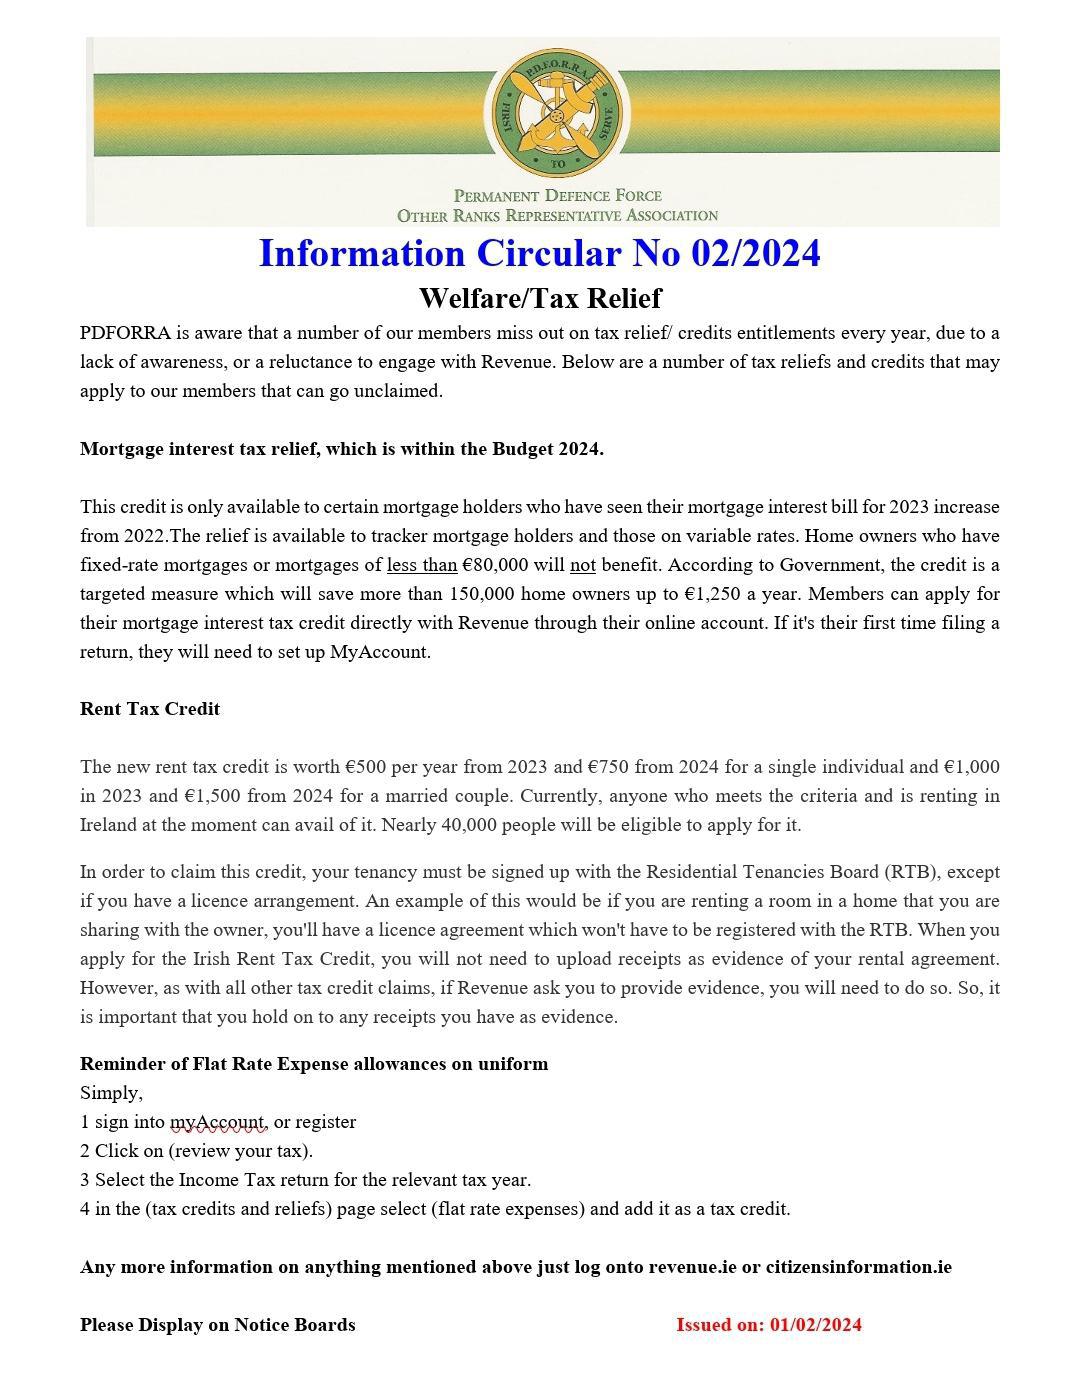 Information Circular No 02 of 24 - Welfare/Tax Relief